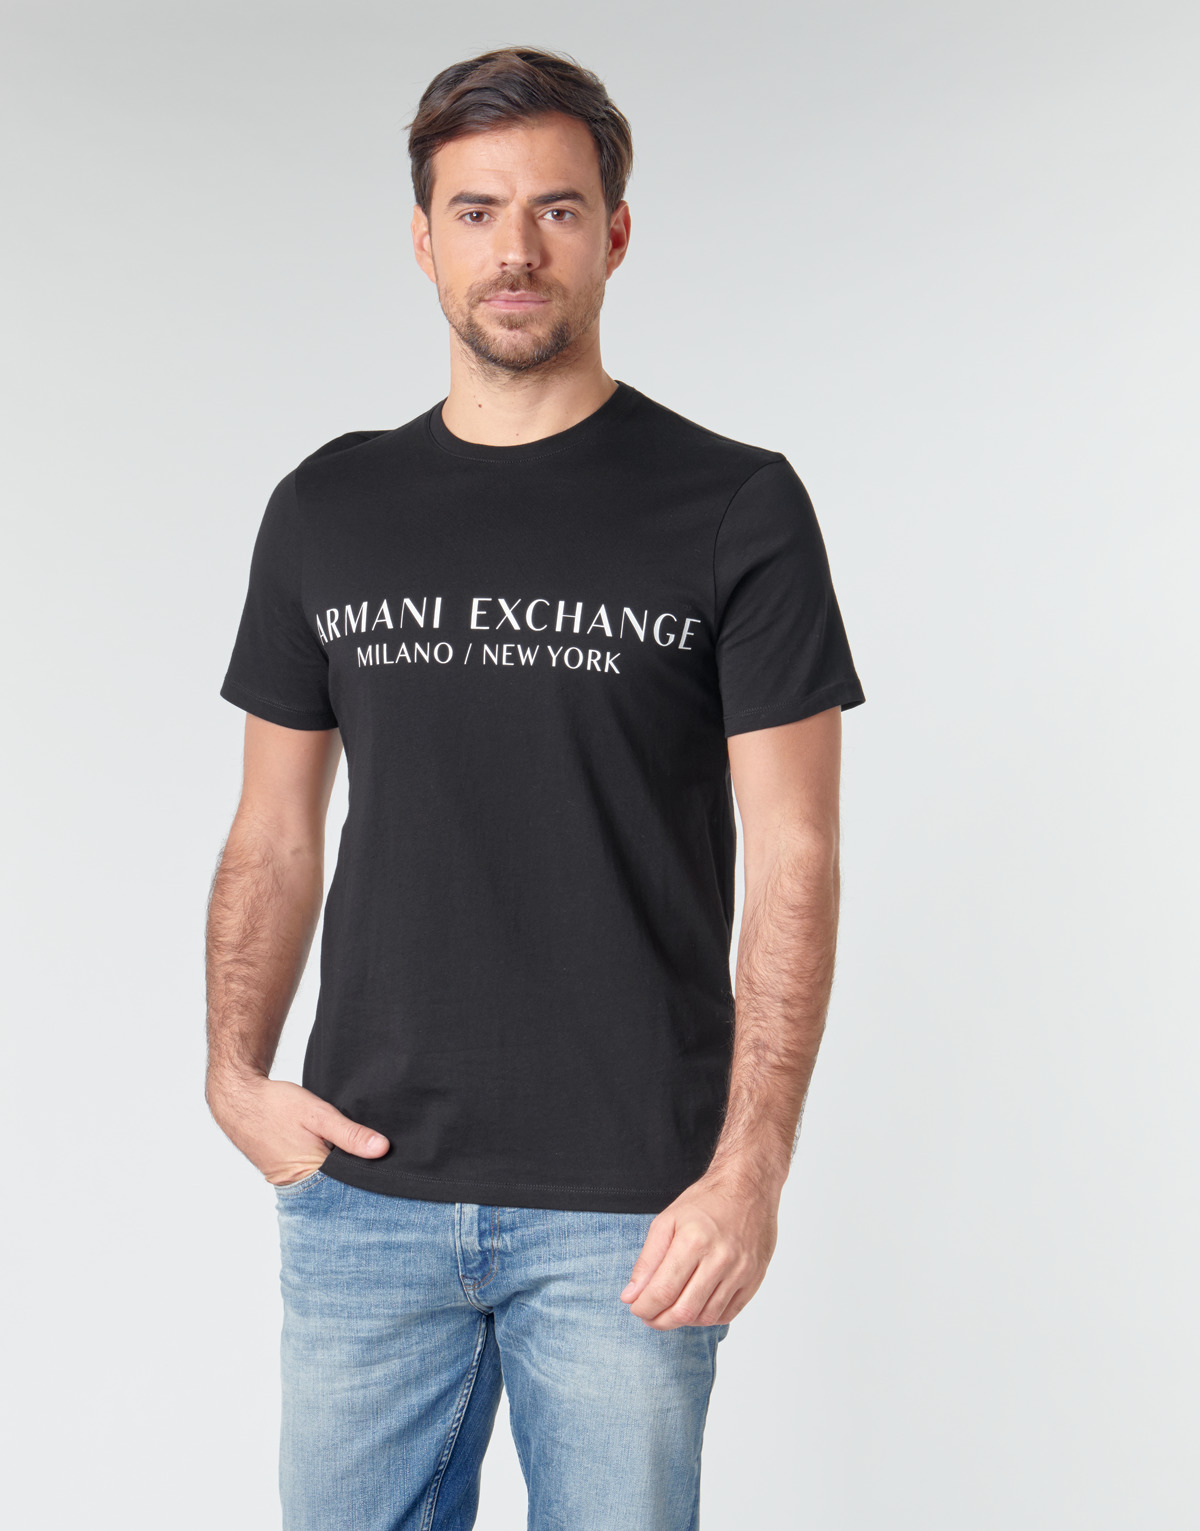 Armani Exchange Noir HULI 3ntAv5Bd